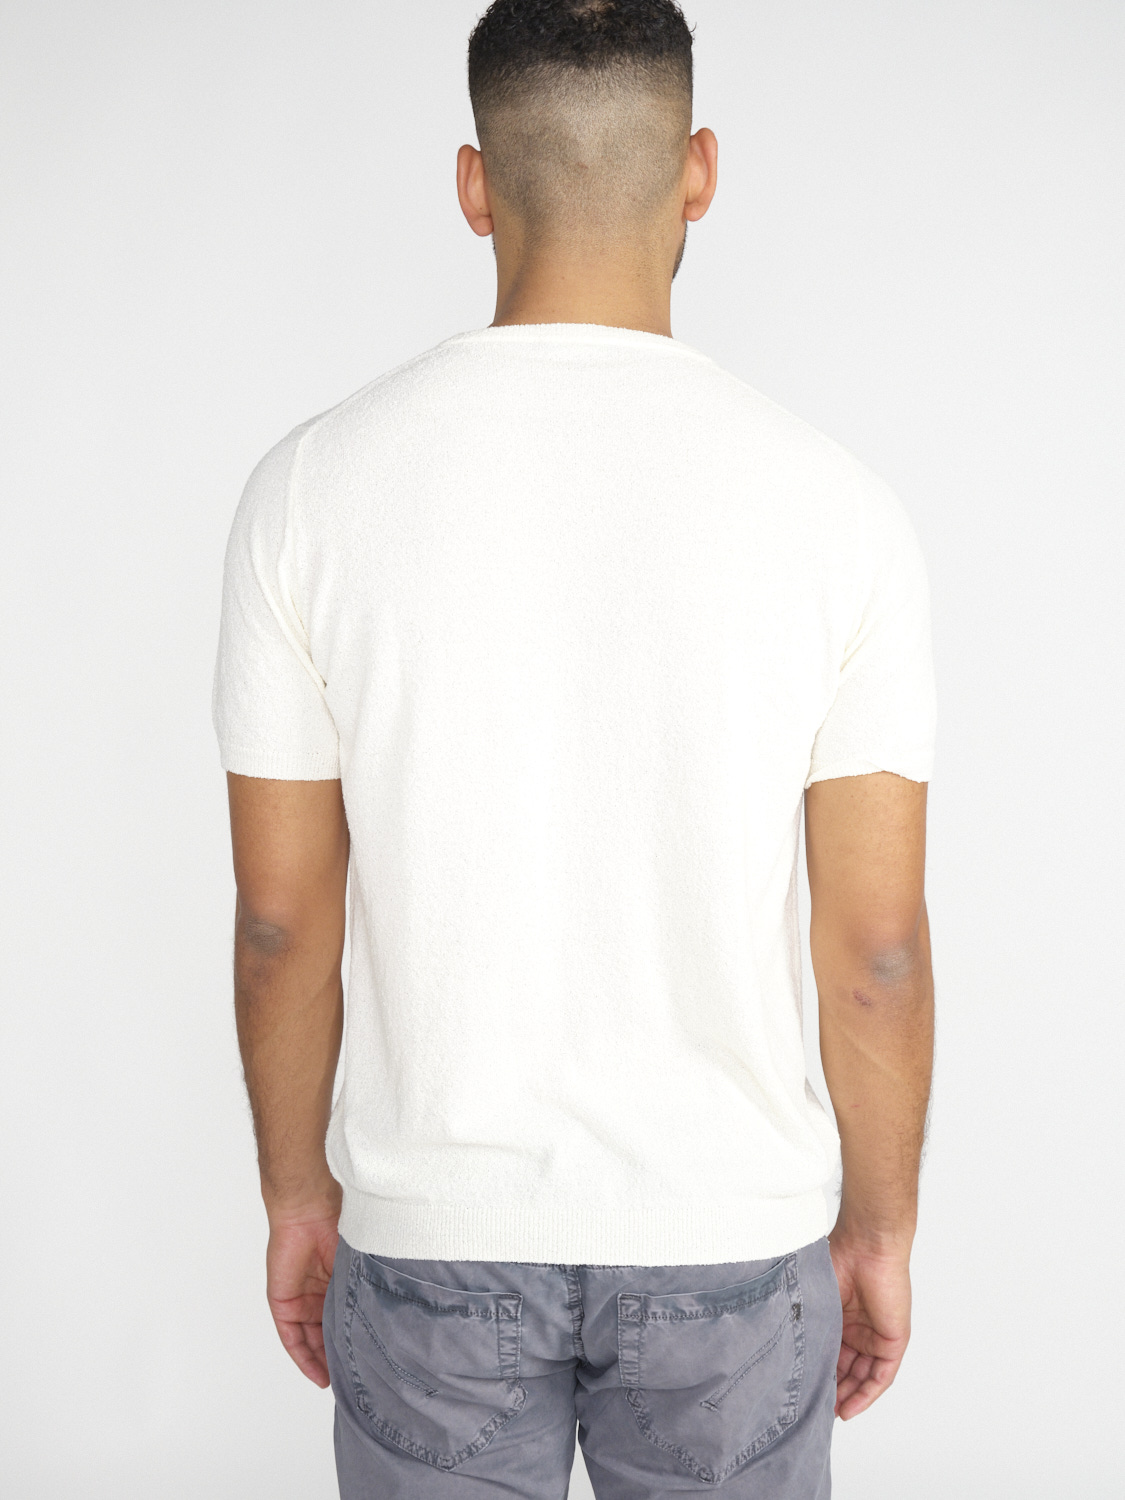 Stefan Brandt Eli 30 - Crew Neck T-Shirt made of cotton white XL